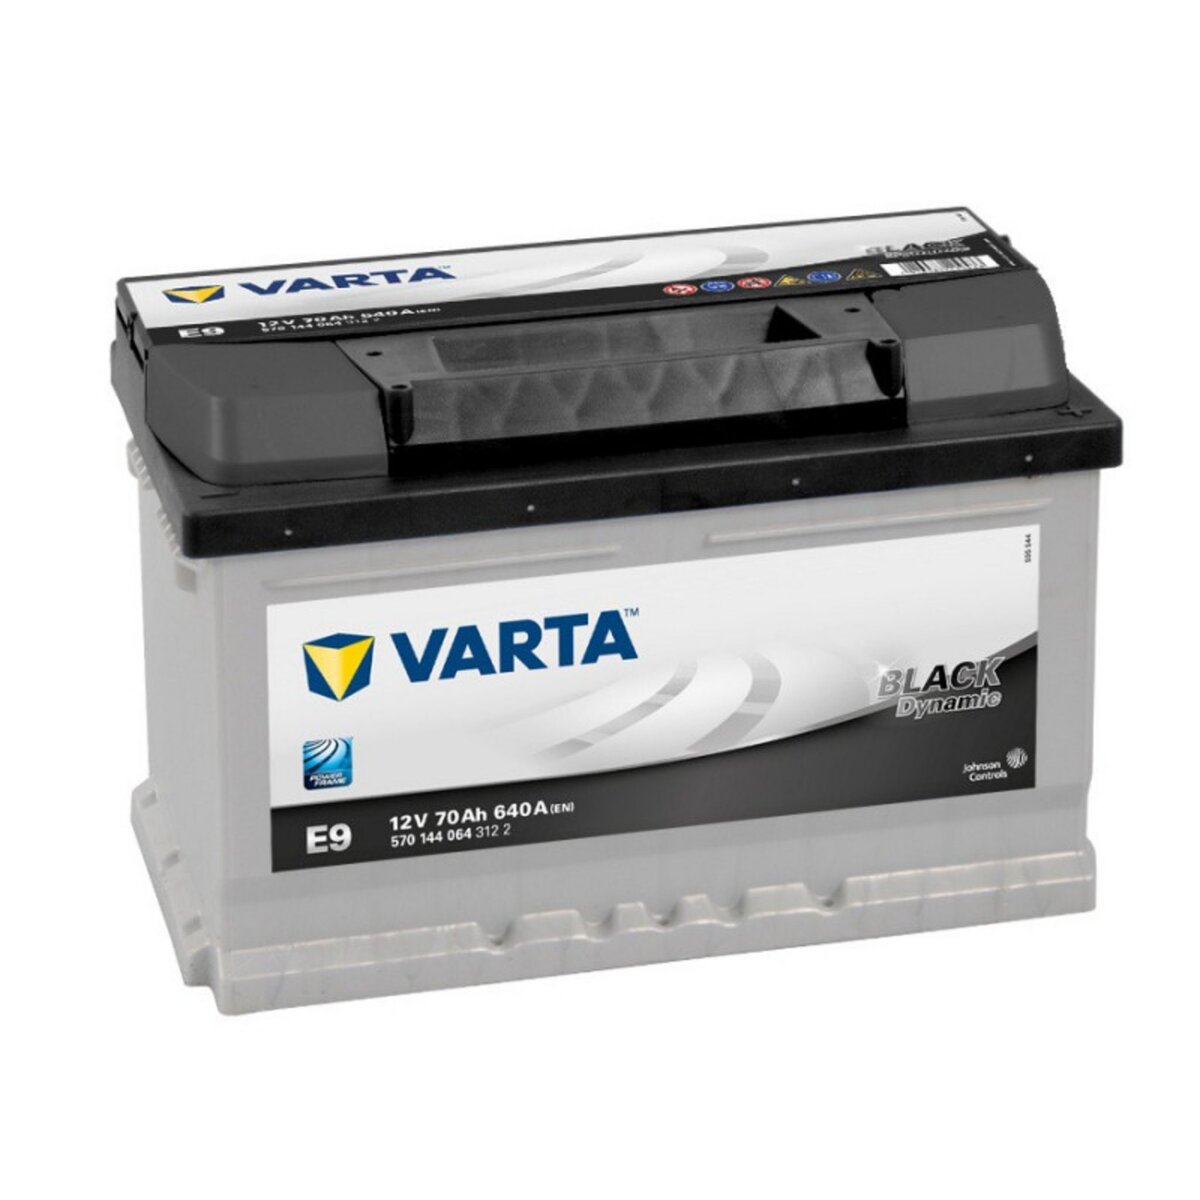 Varta Batterie Varta Black E9 12v 70ah 640A pas cher 